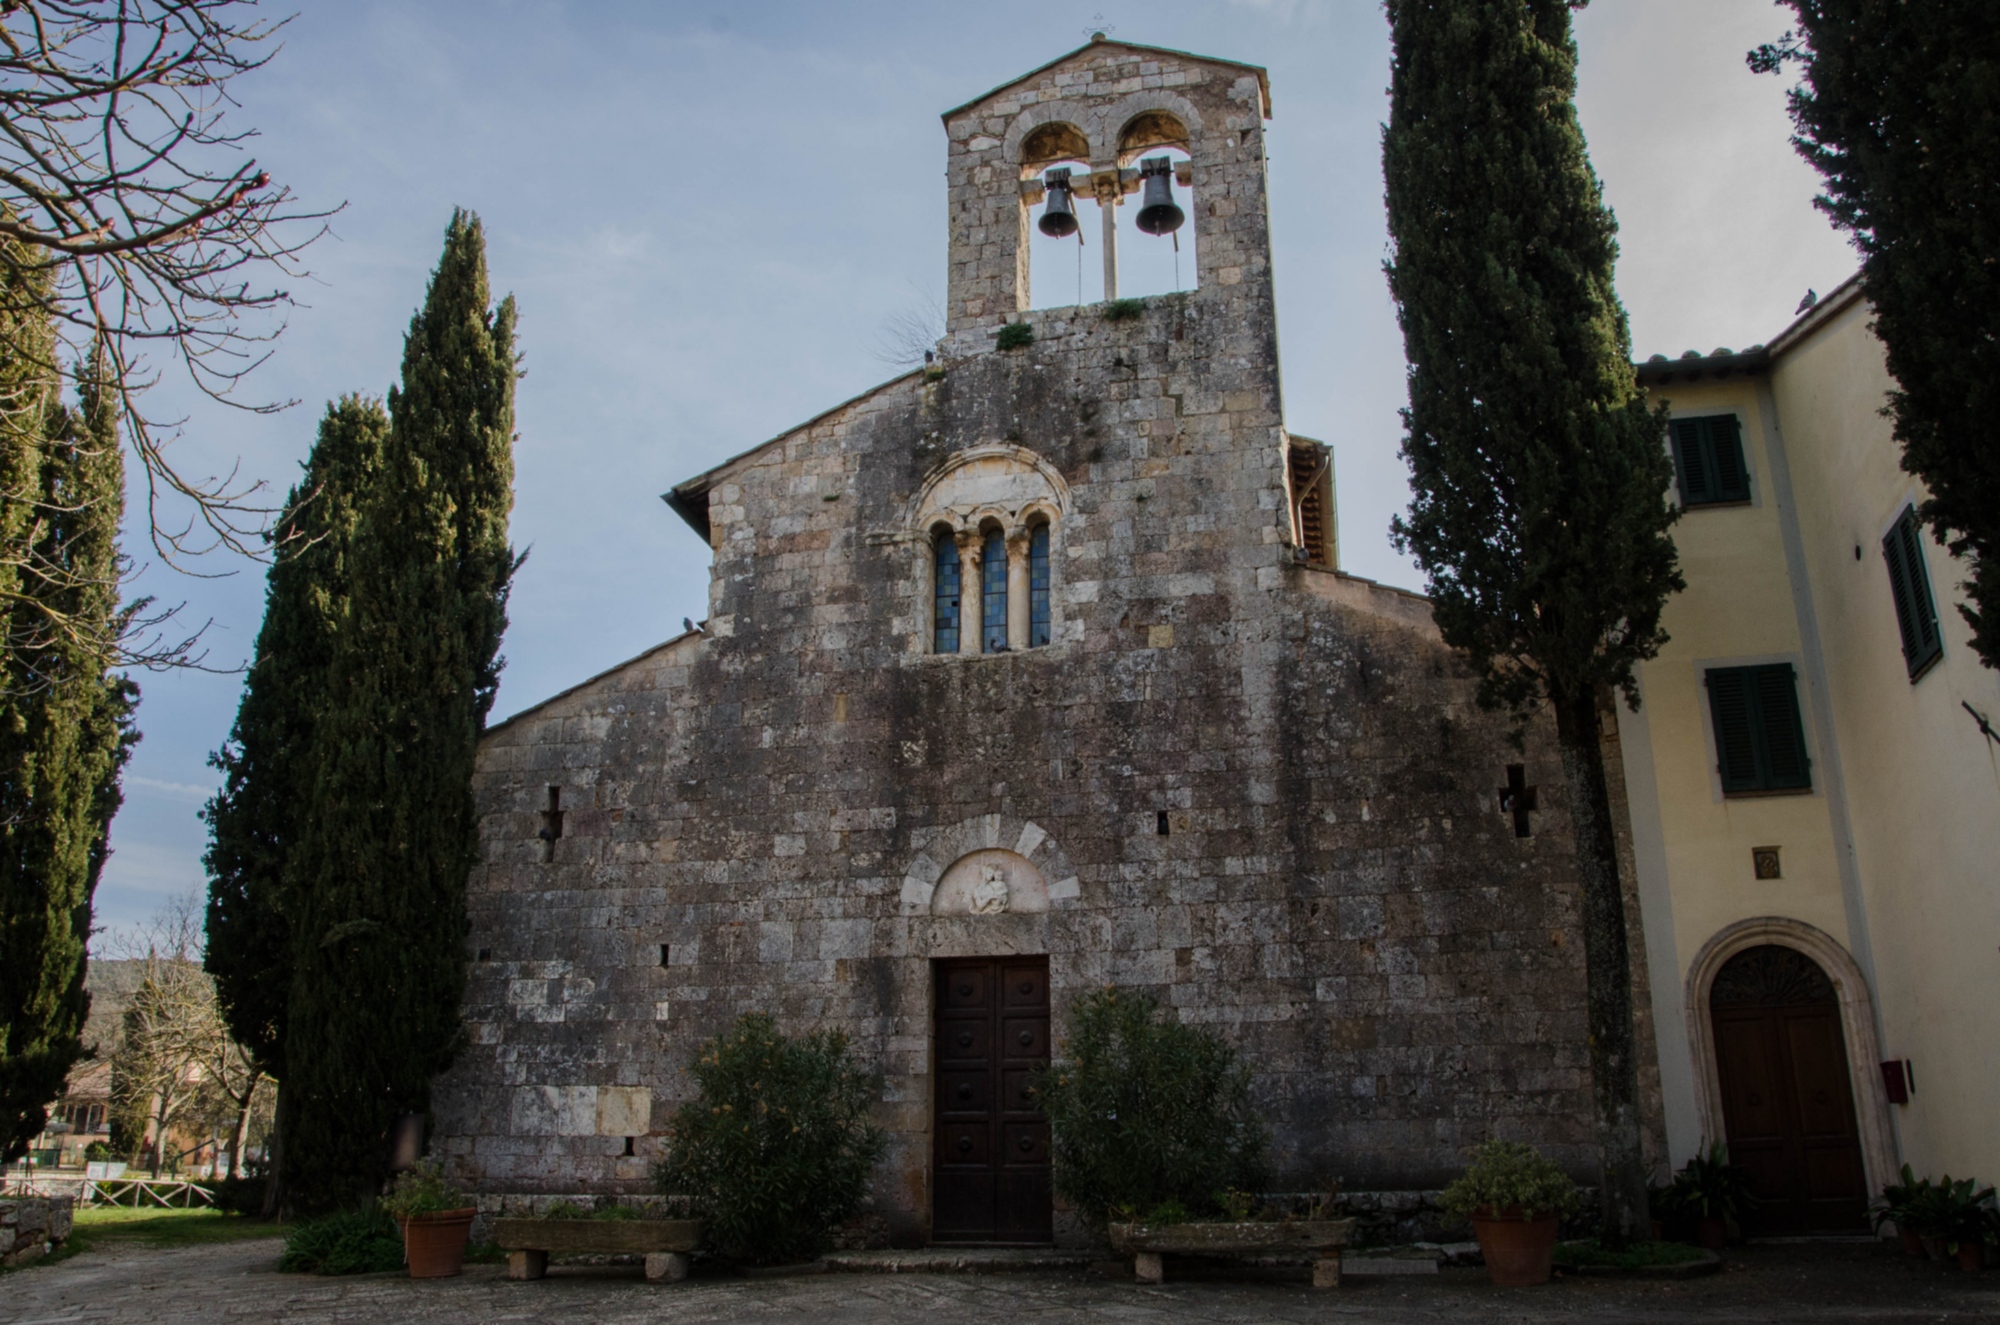 The parish church of San Giovanni Battista in Pievescola